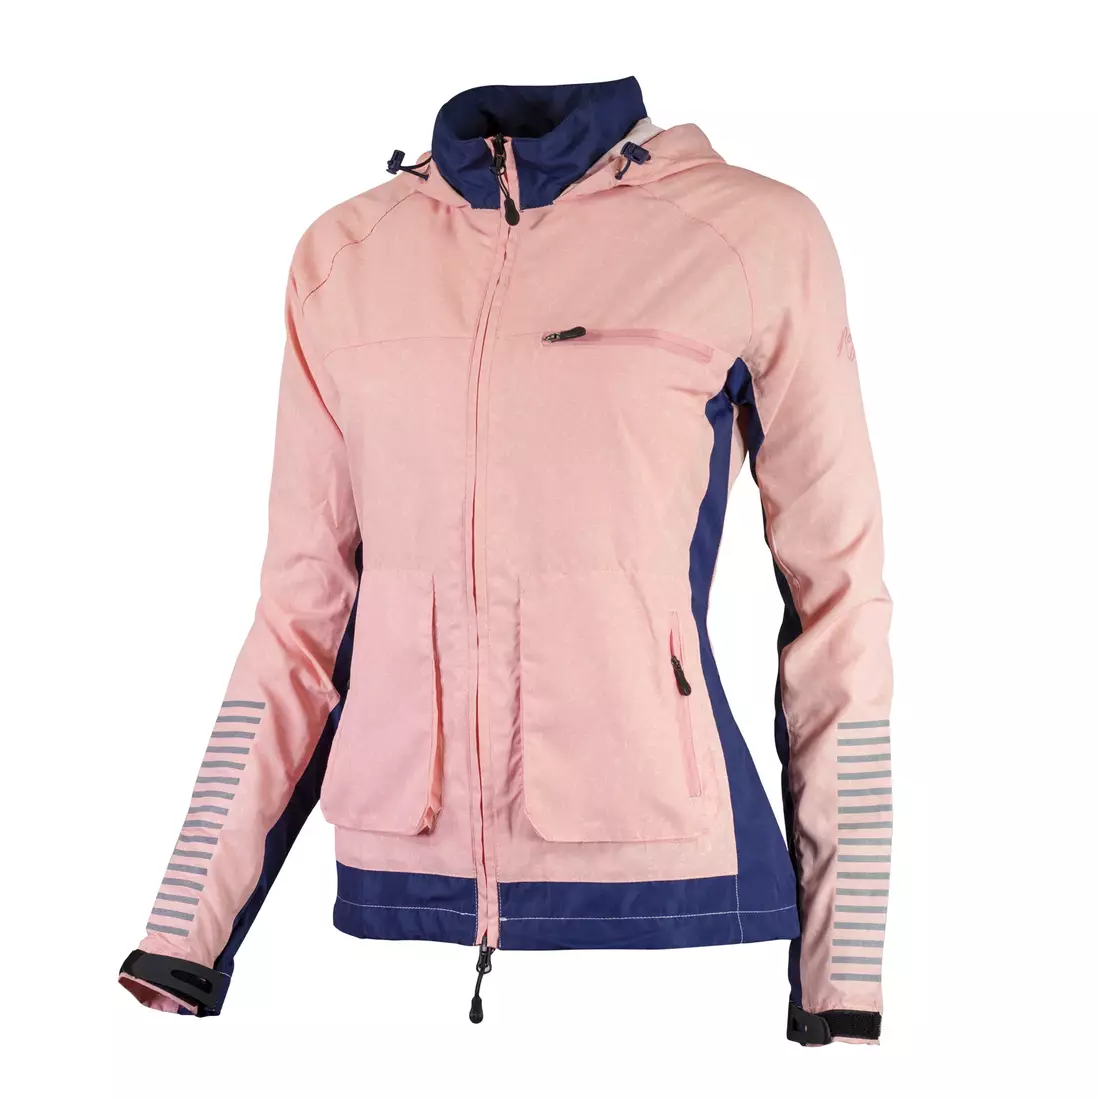 ROGELLI RUN DESIRE 840.865 - women's lightweight running windbreaker jacket, pink-coral